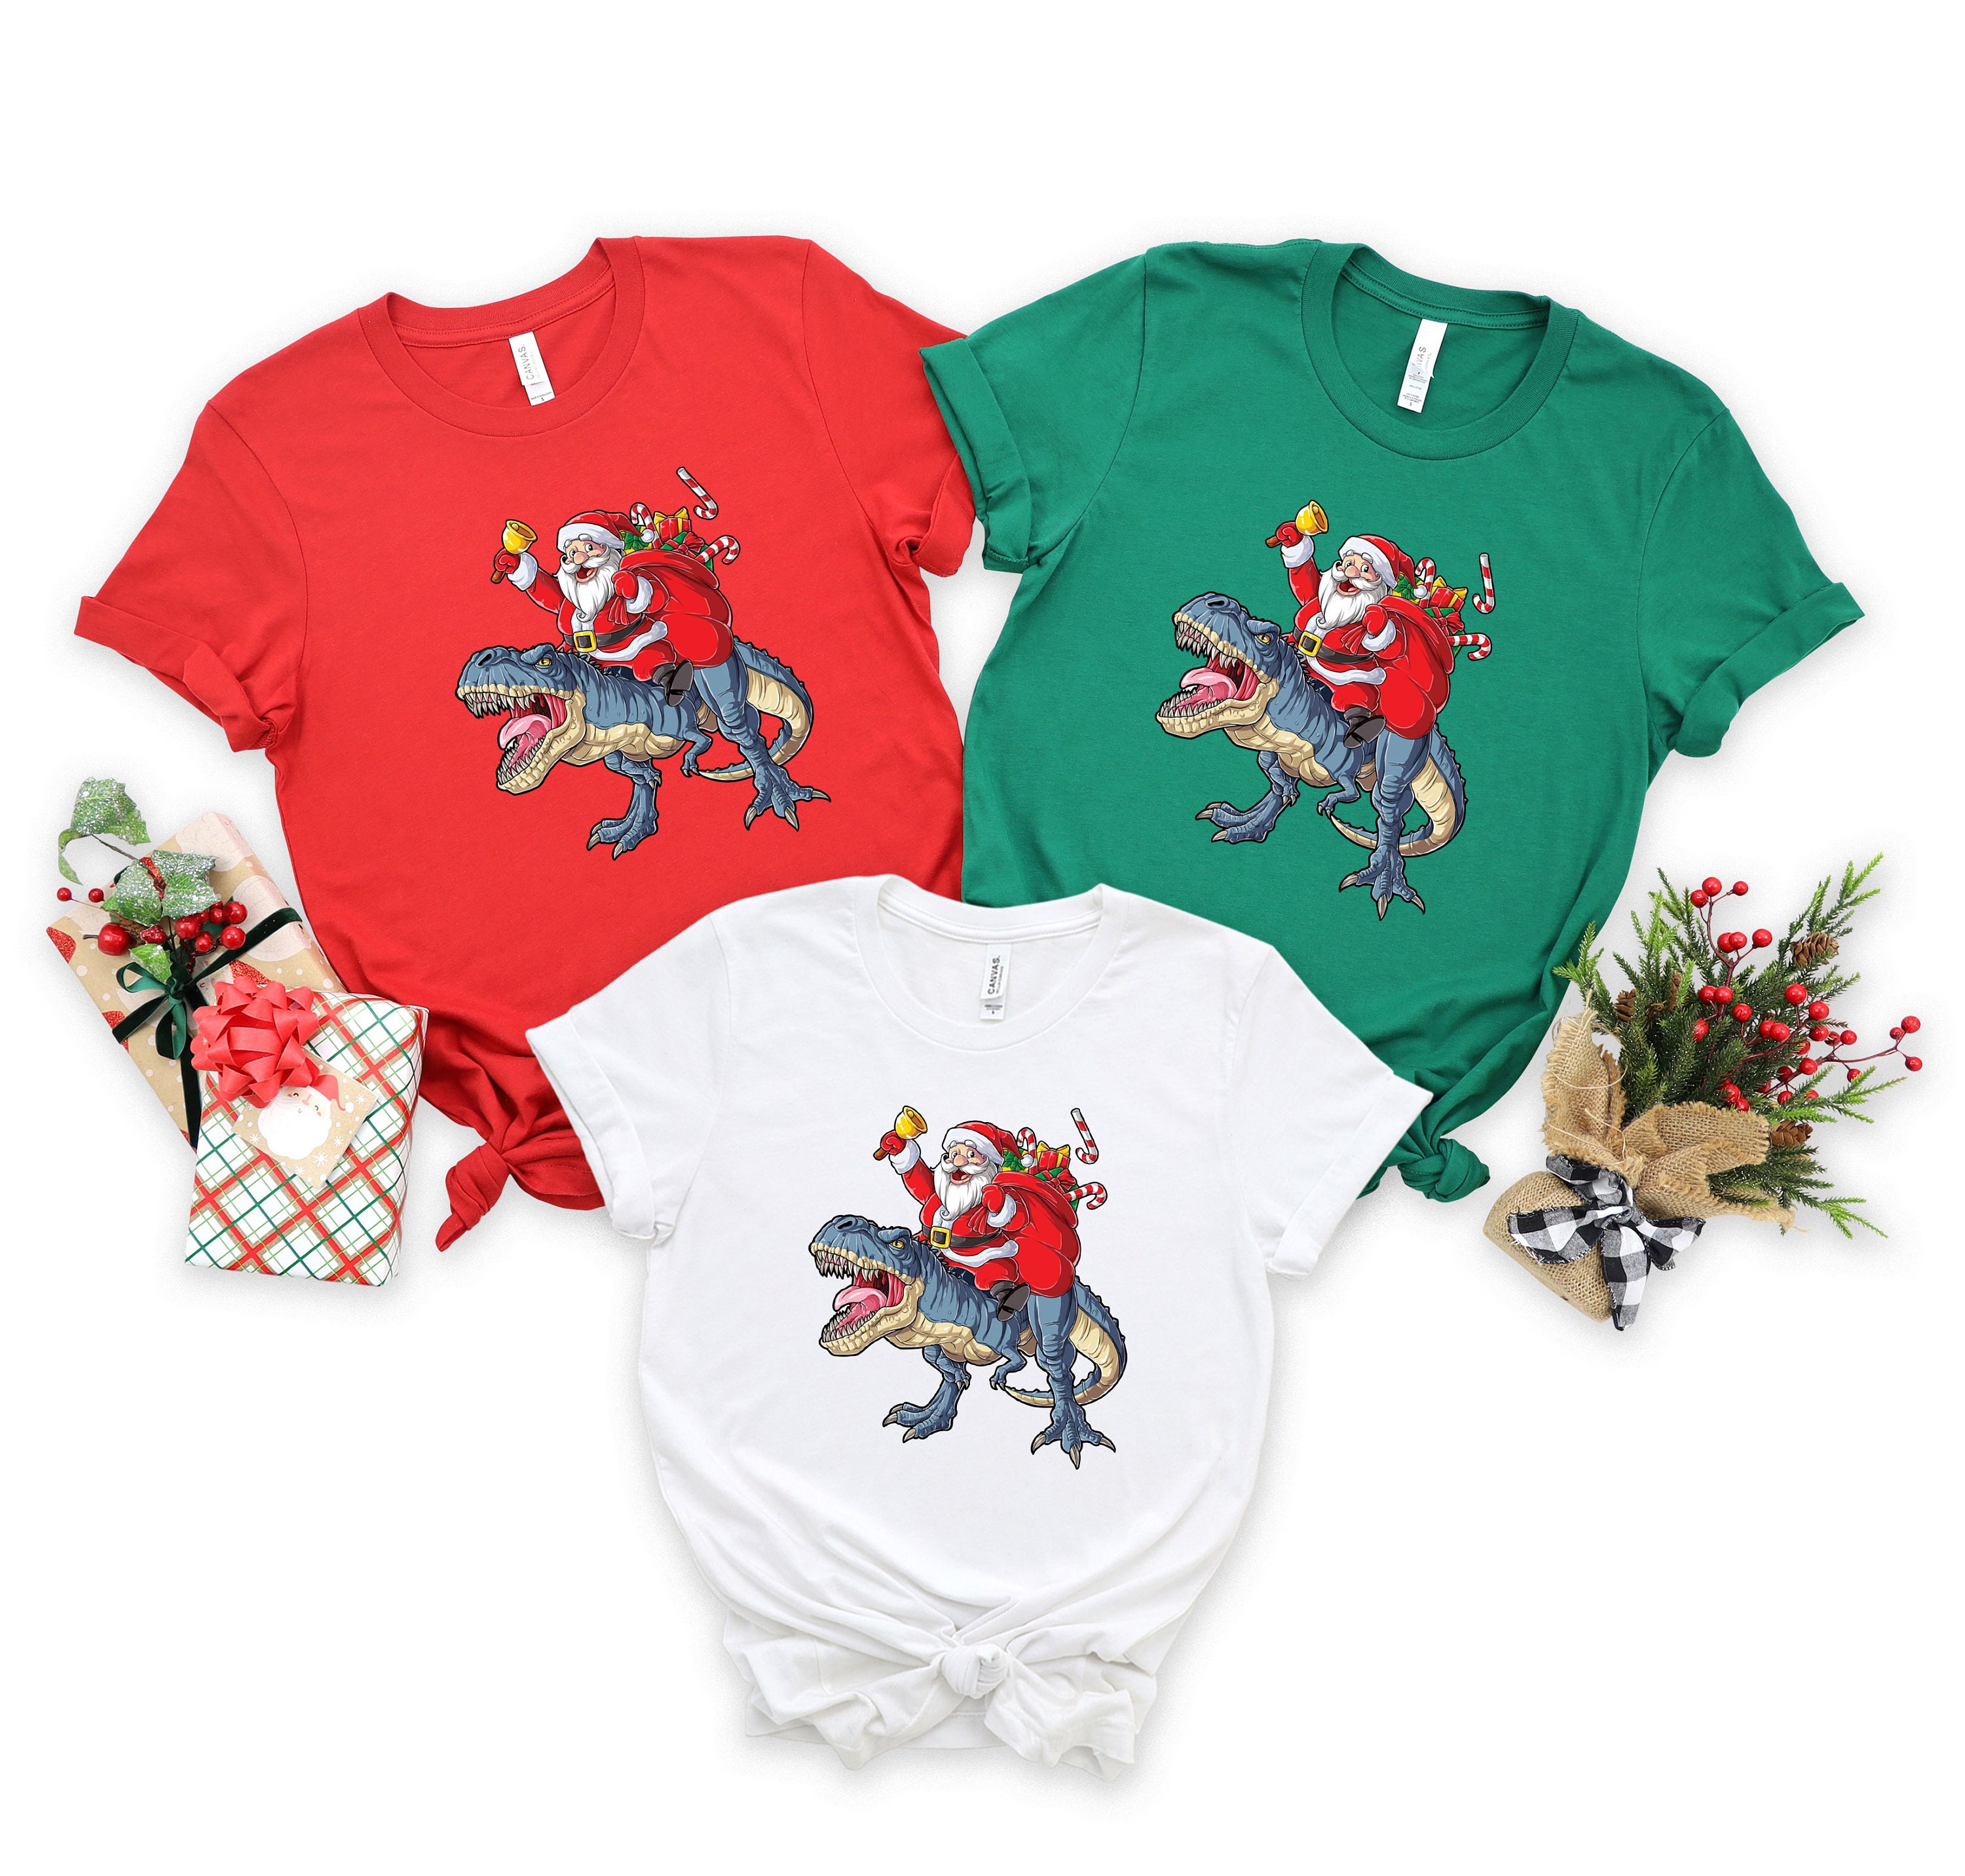 Discover Santa Claus Riding Dinosaur Shirt - Christmas T-rex Tee - Dino Lover Gift T-shirt - Funny Xmas Boy Shirt - Holiday Party T-shirt